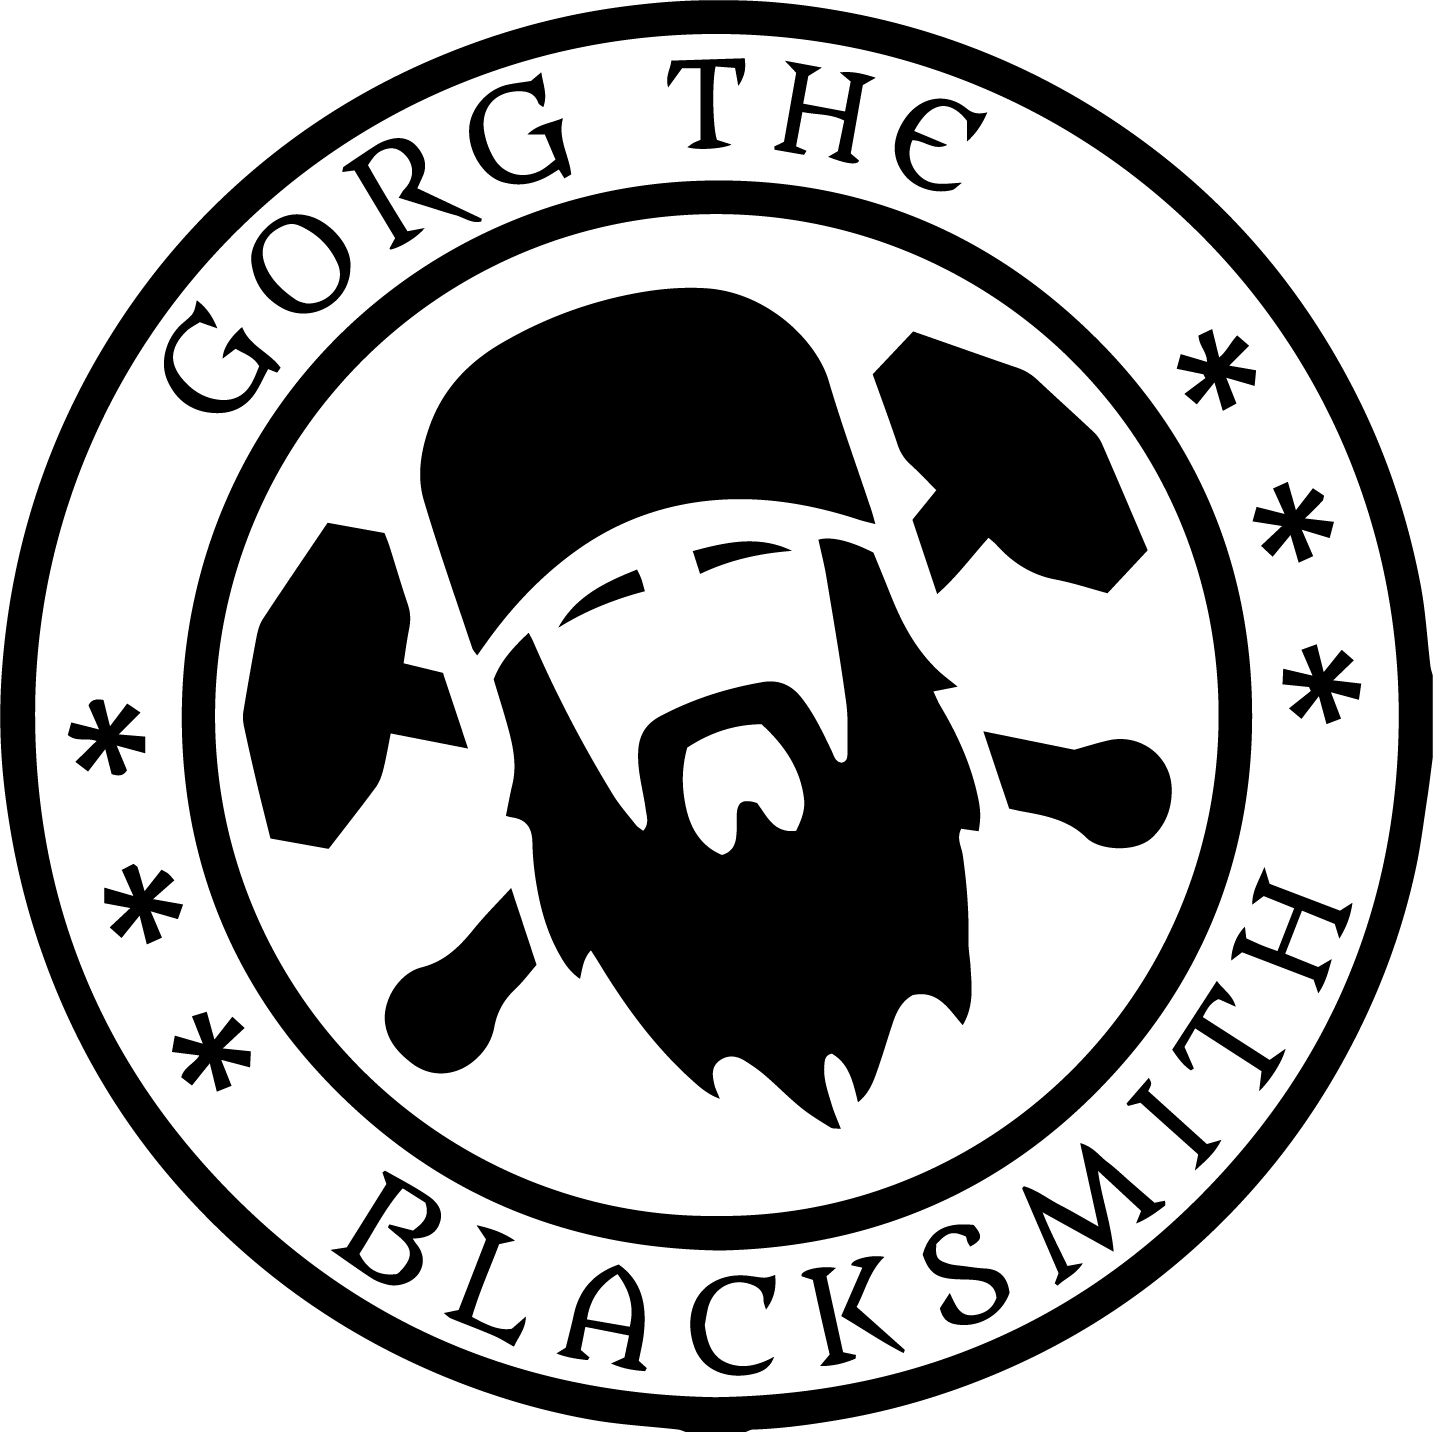 Gorg The Blacksmith